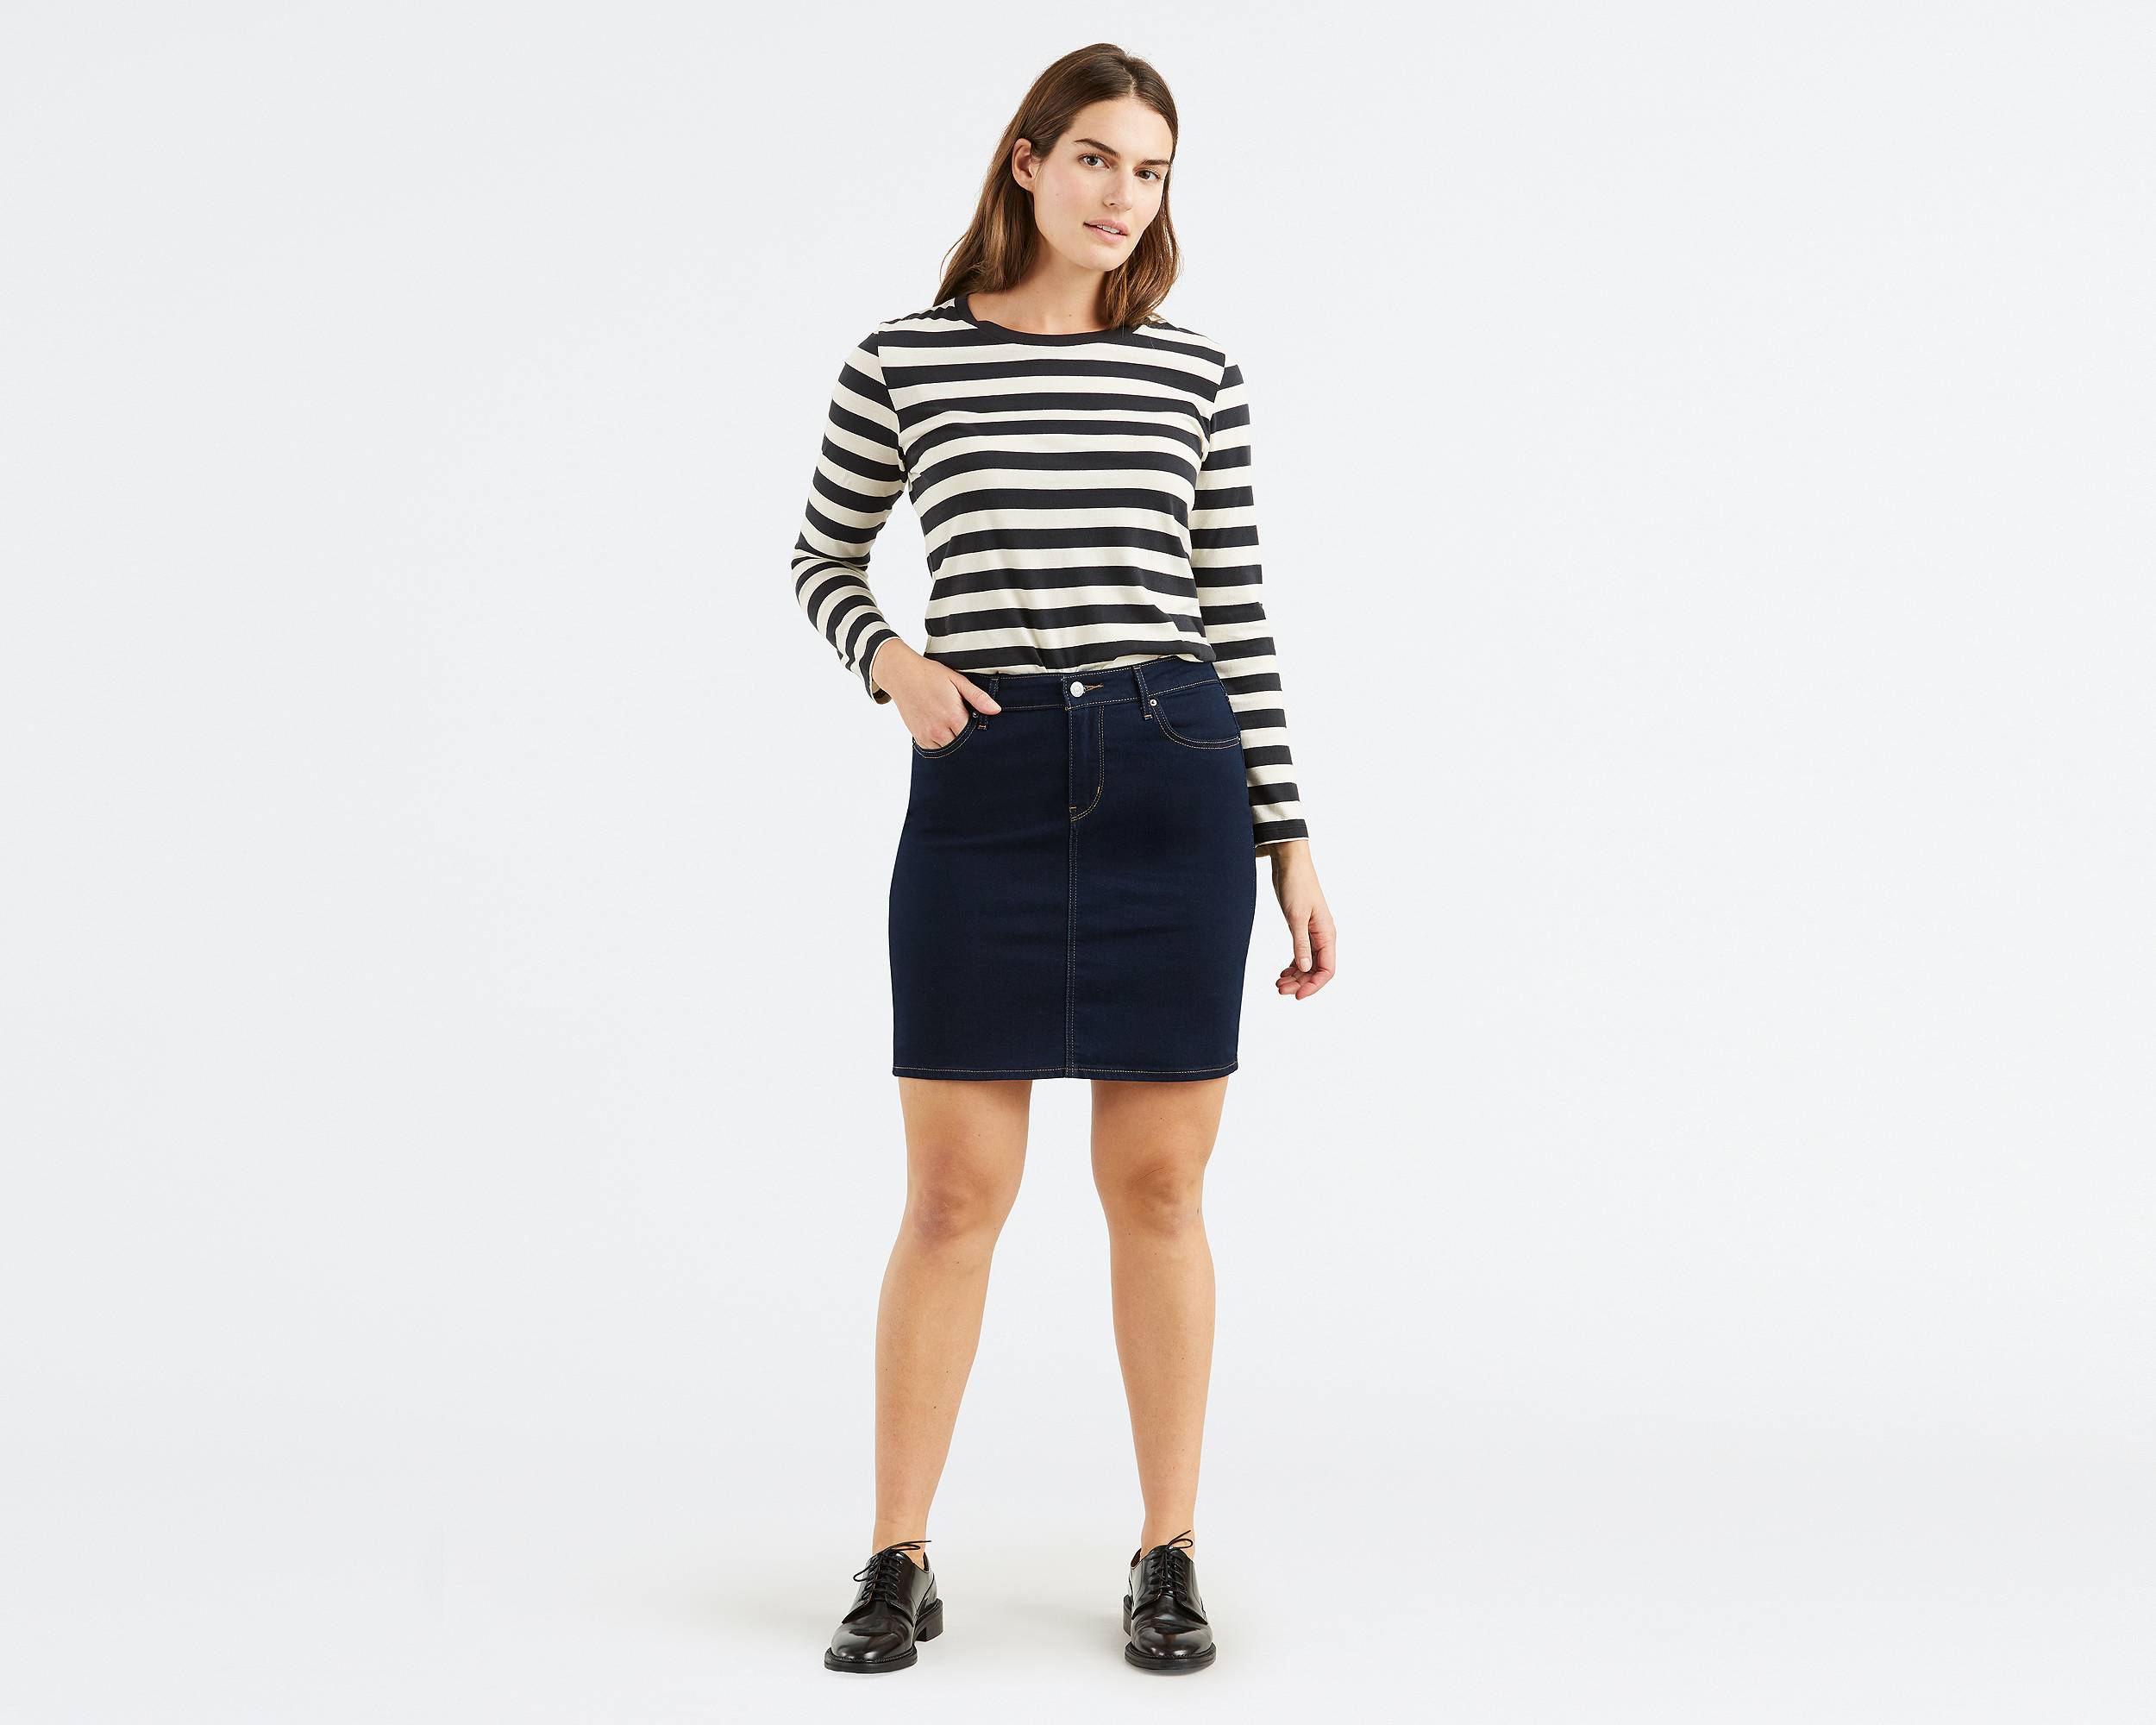 Denim Skirts & Dresses - Shop this Season's Jean Skirts | Levi's®